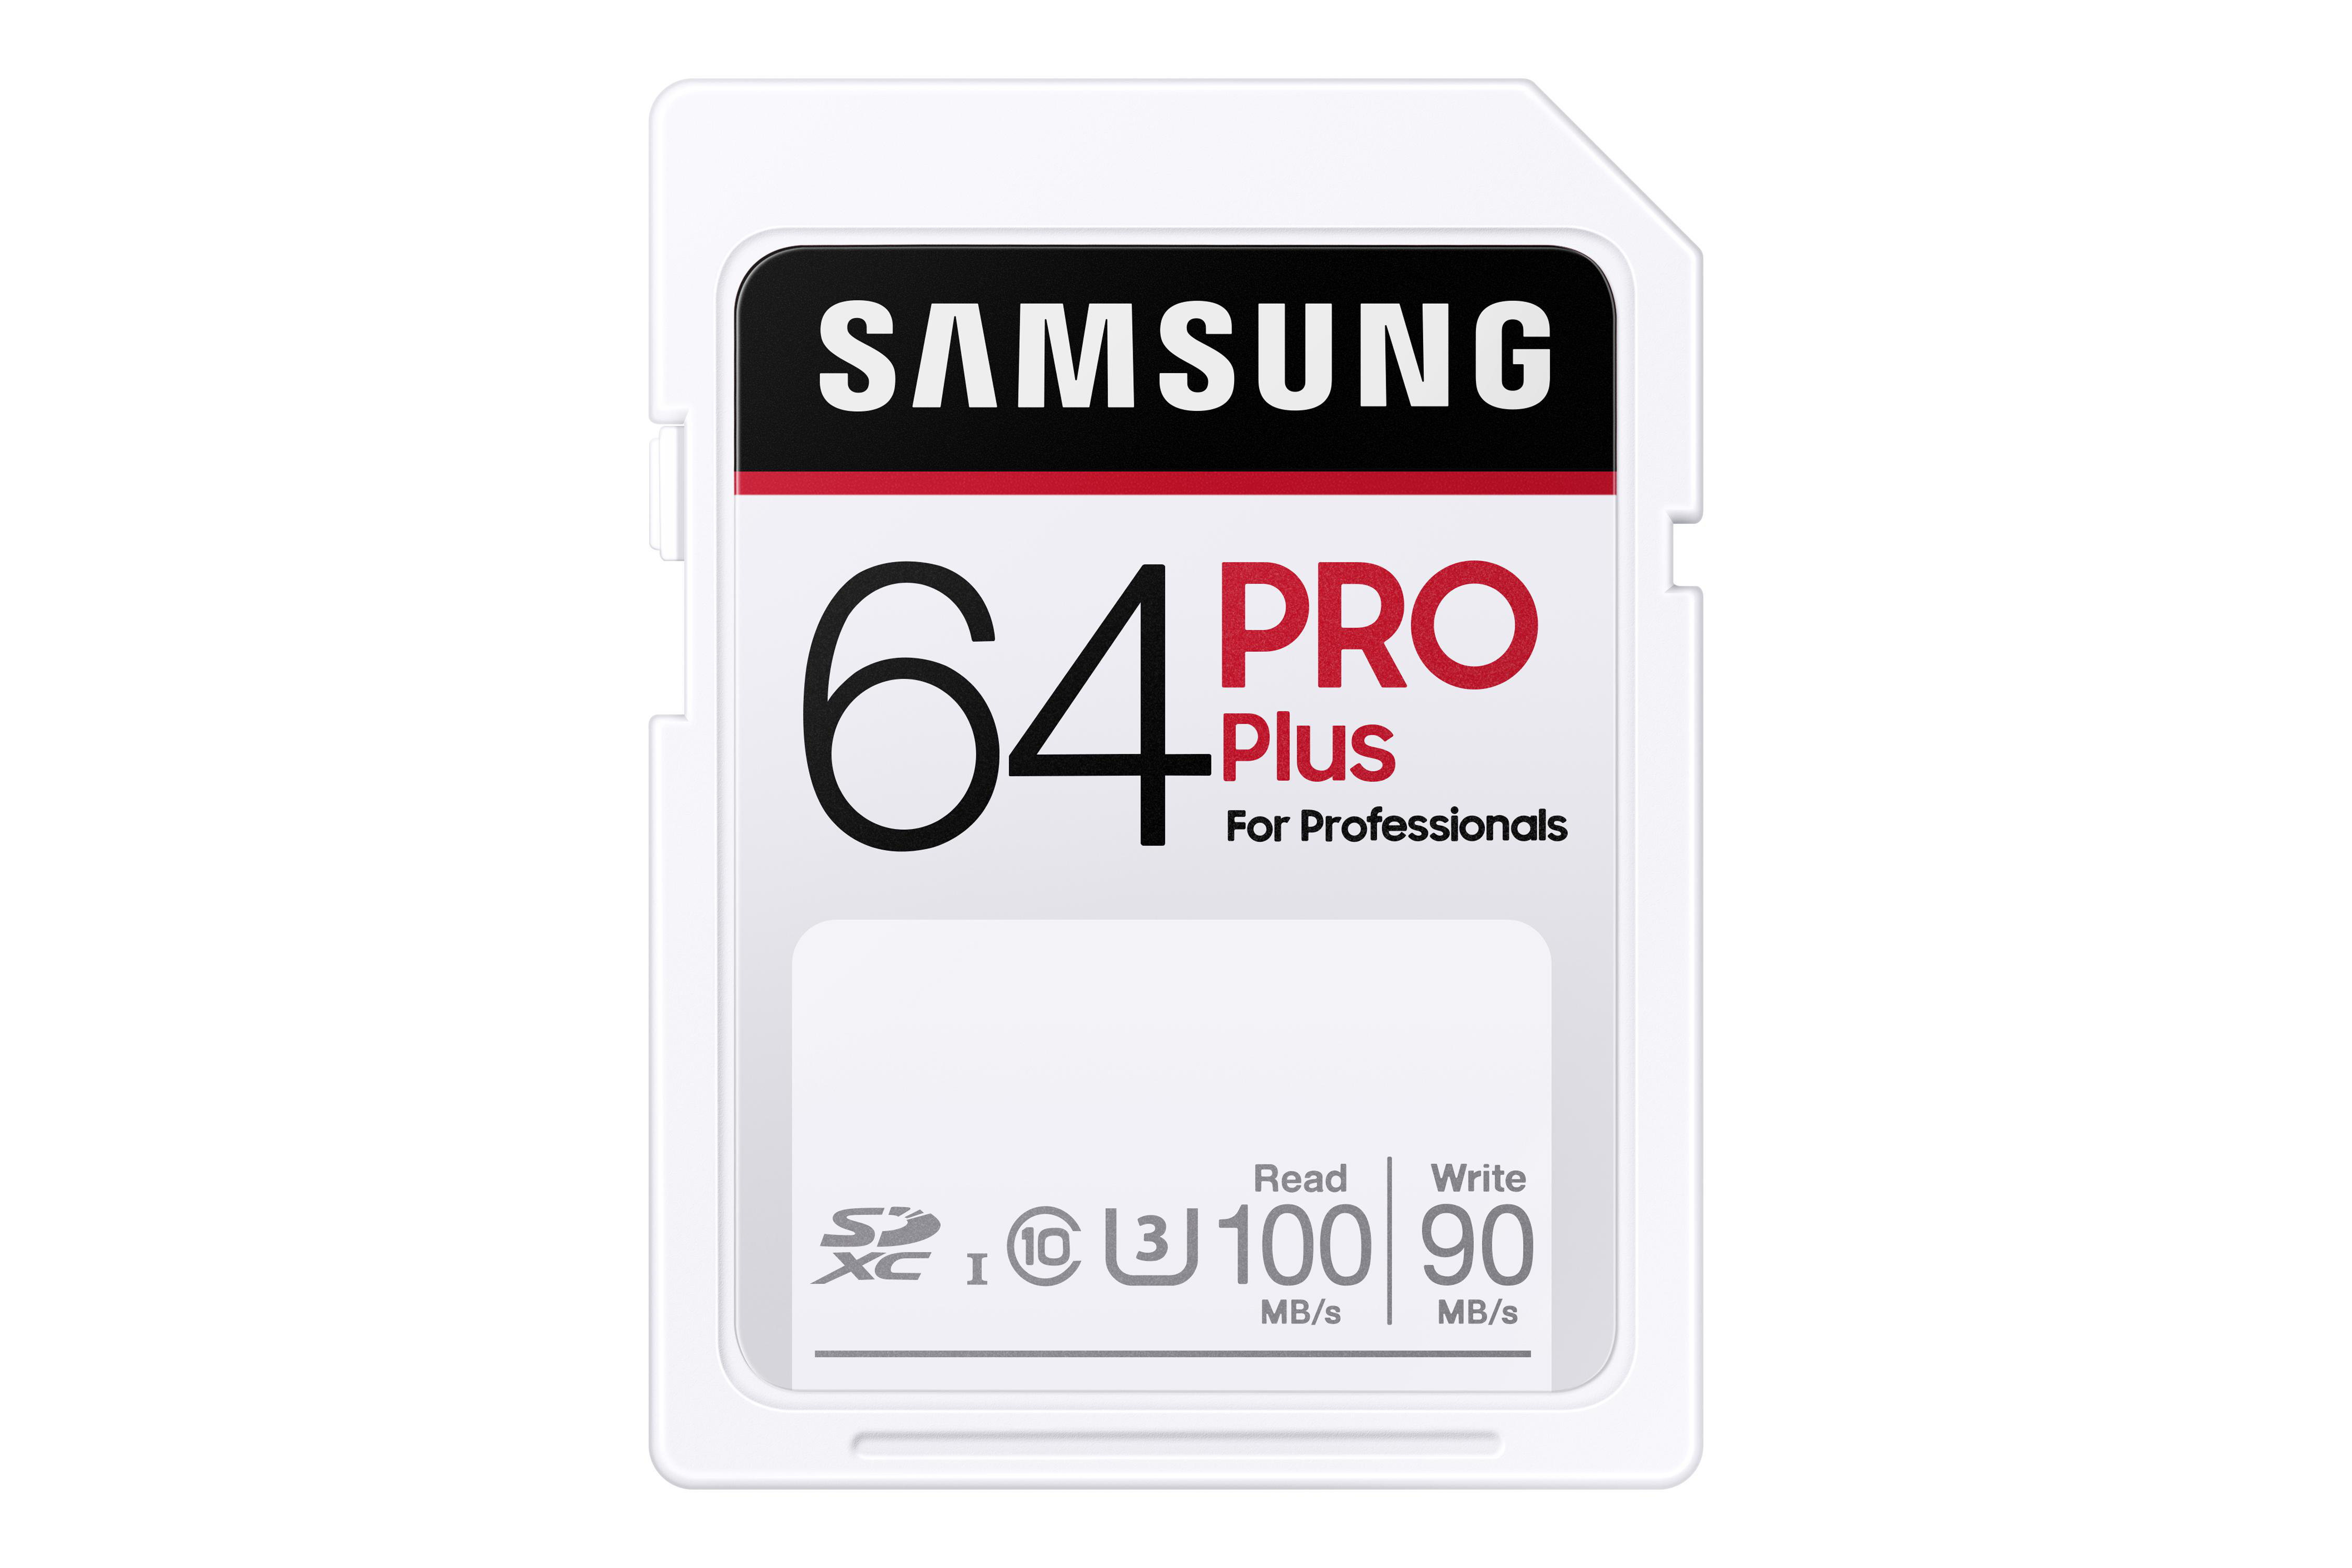 SAMSUNG GB, MB/s Plus, PRO 64 100 SDXC Speicherkarte,